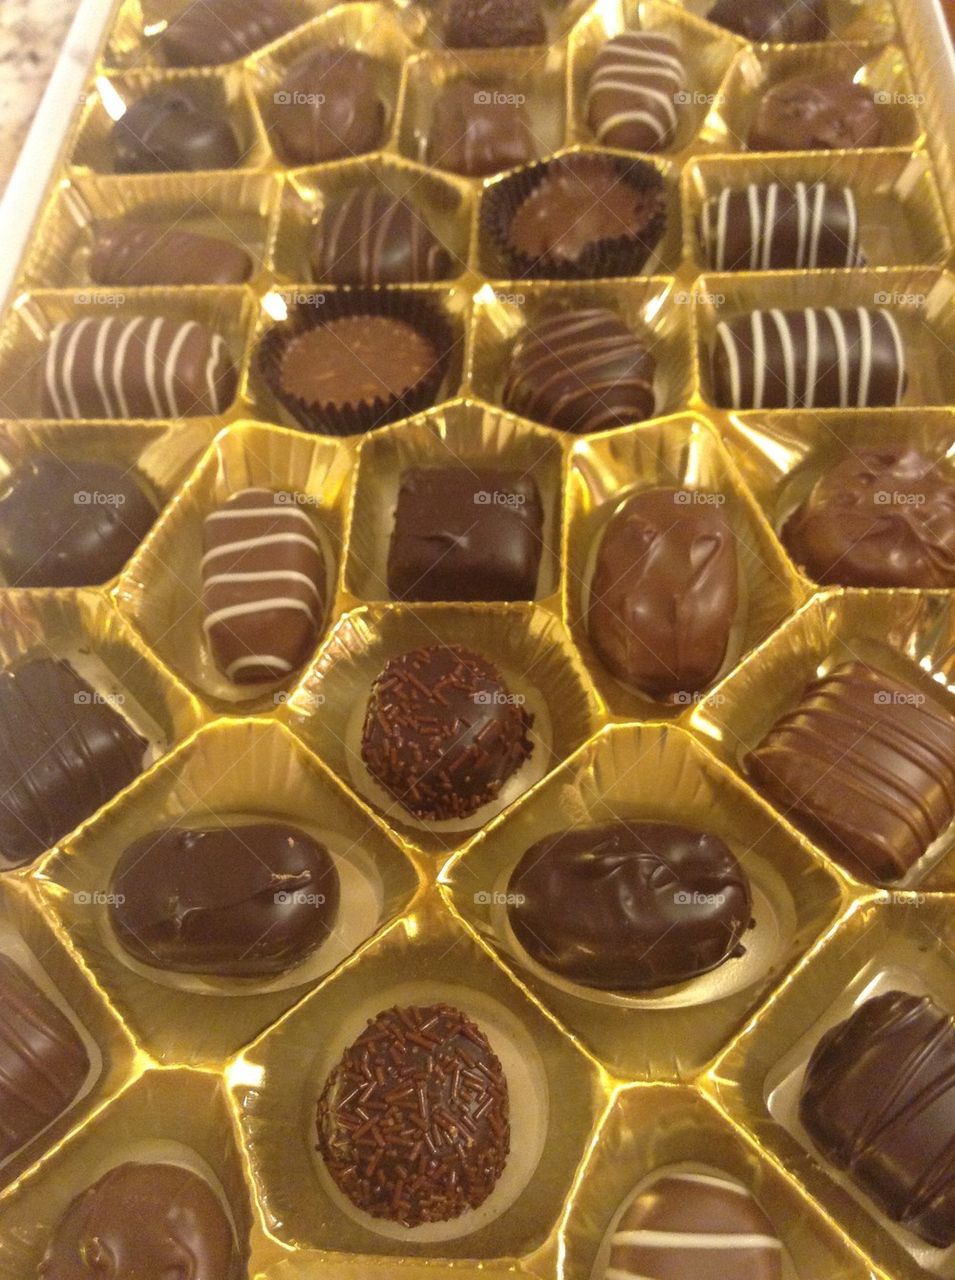 Assorted Chocolate!